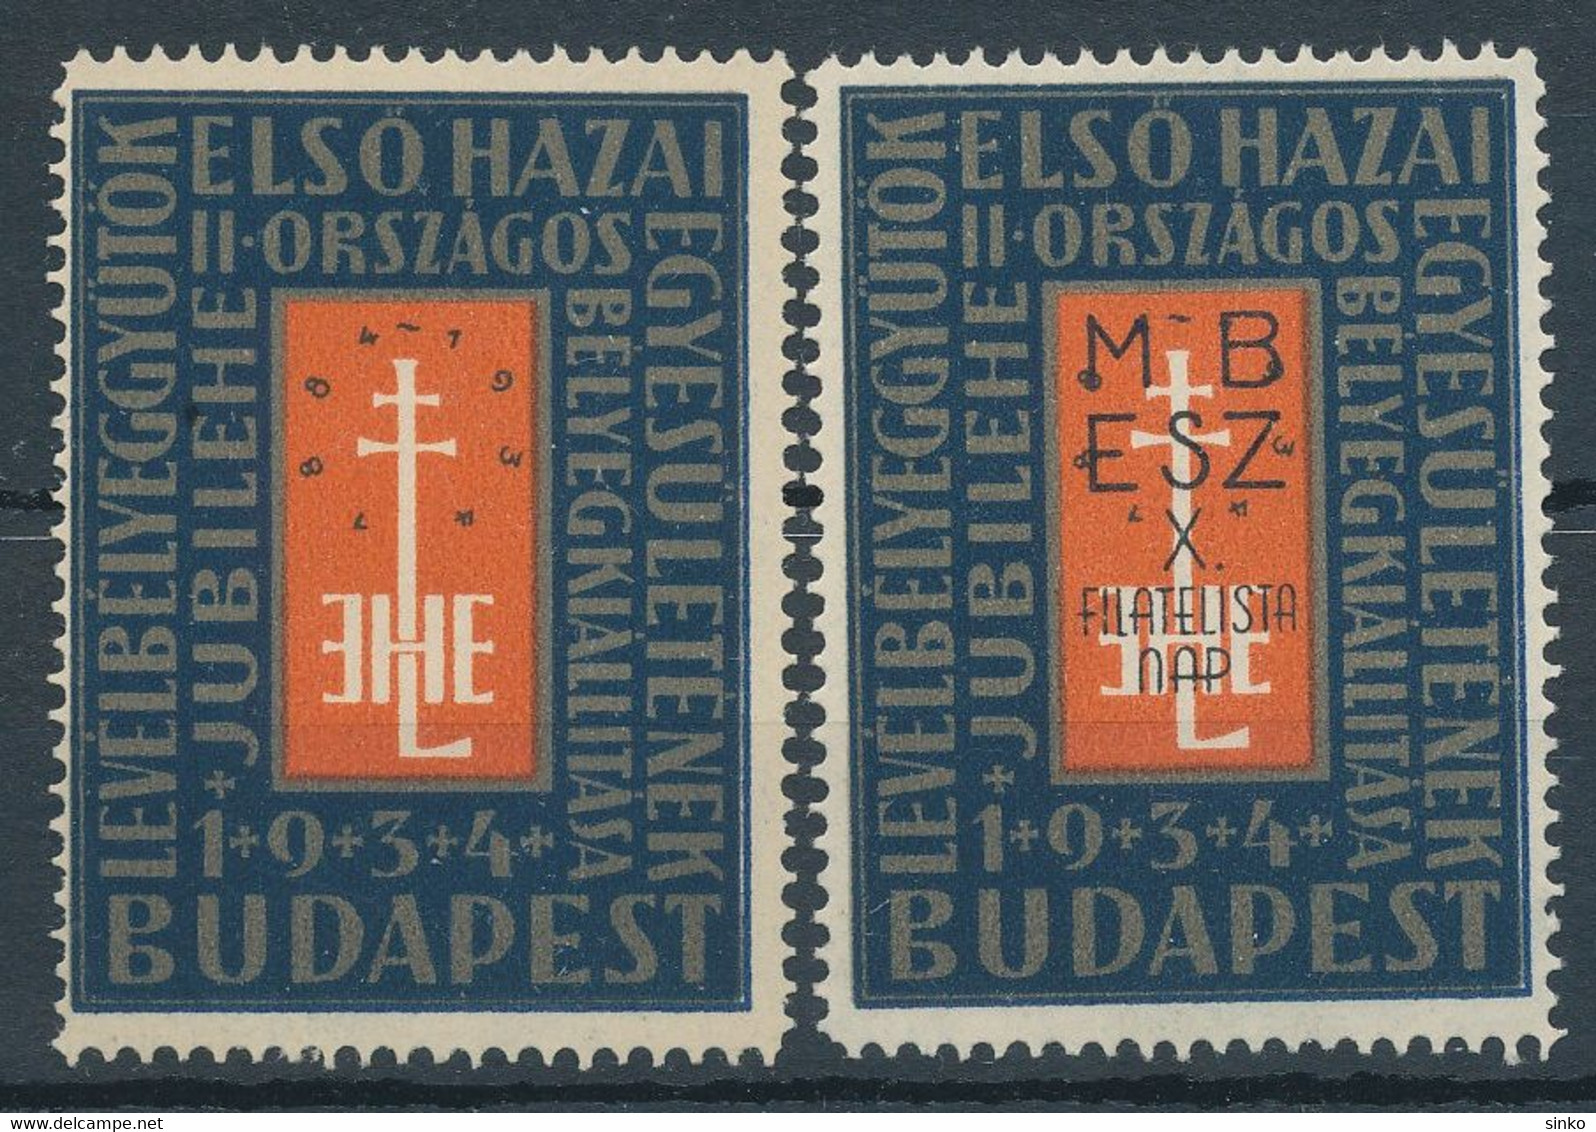 1934. Jubilehe Stamp Exhibition Budapest - Commemorative Sheets